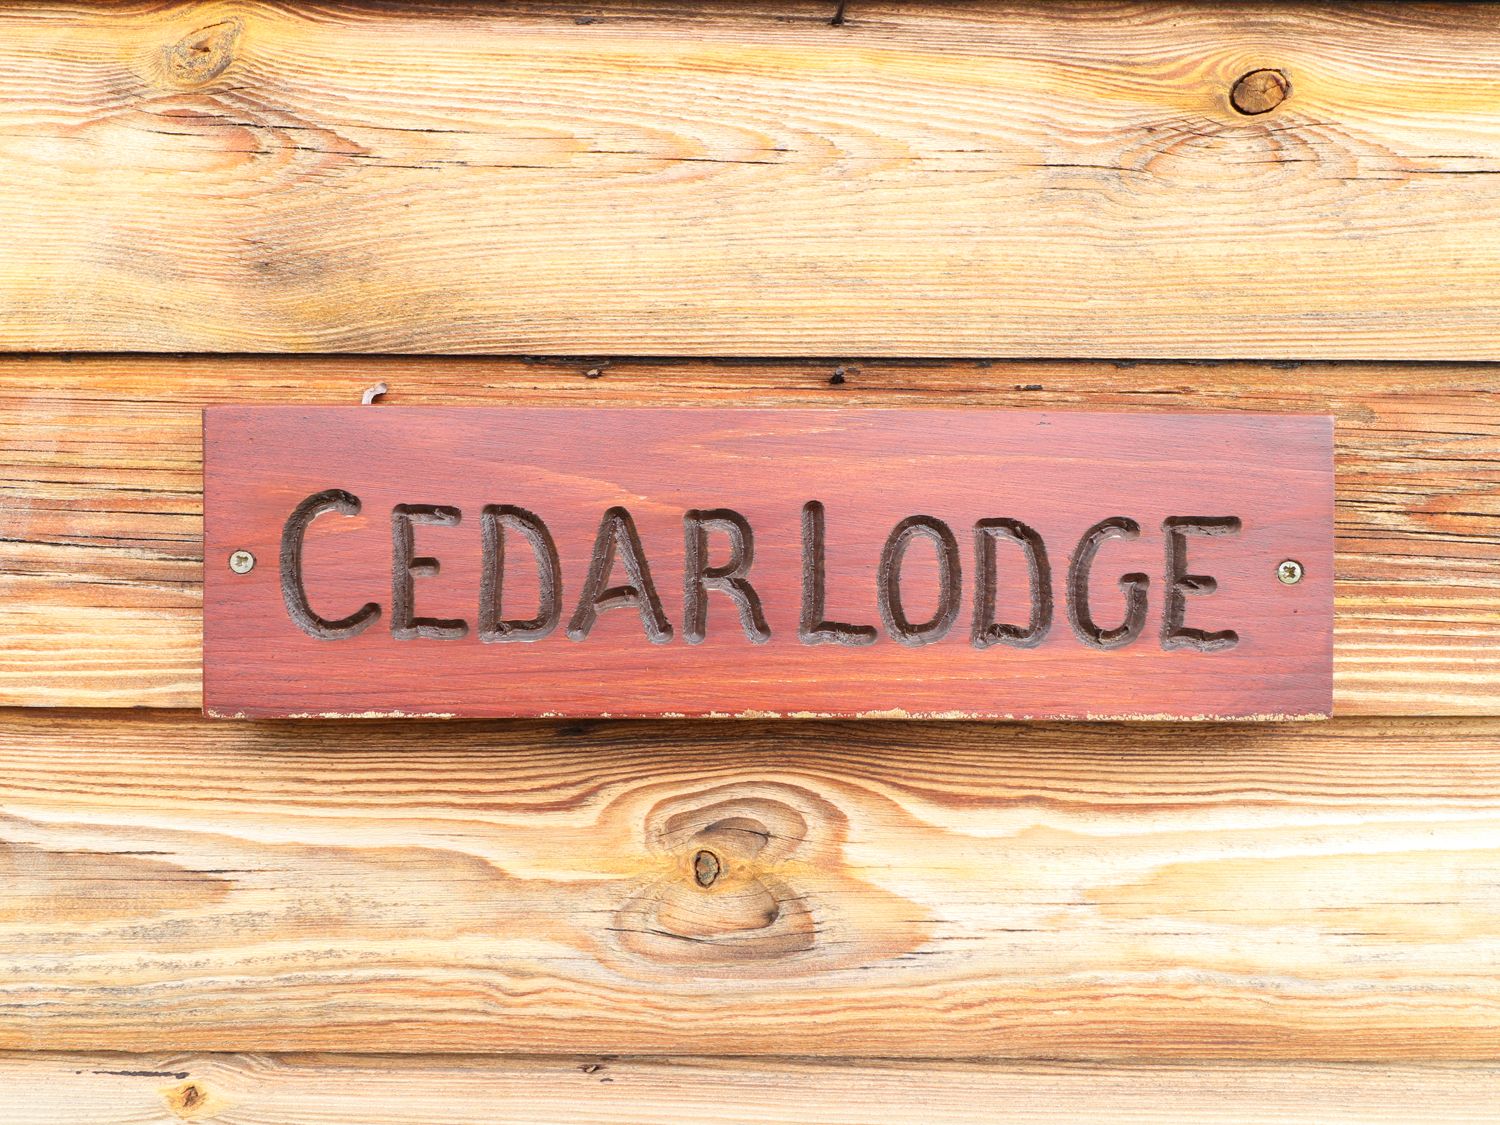 Cedar Lodge, East of England